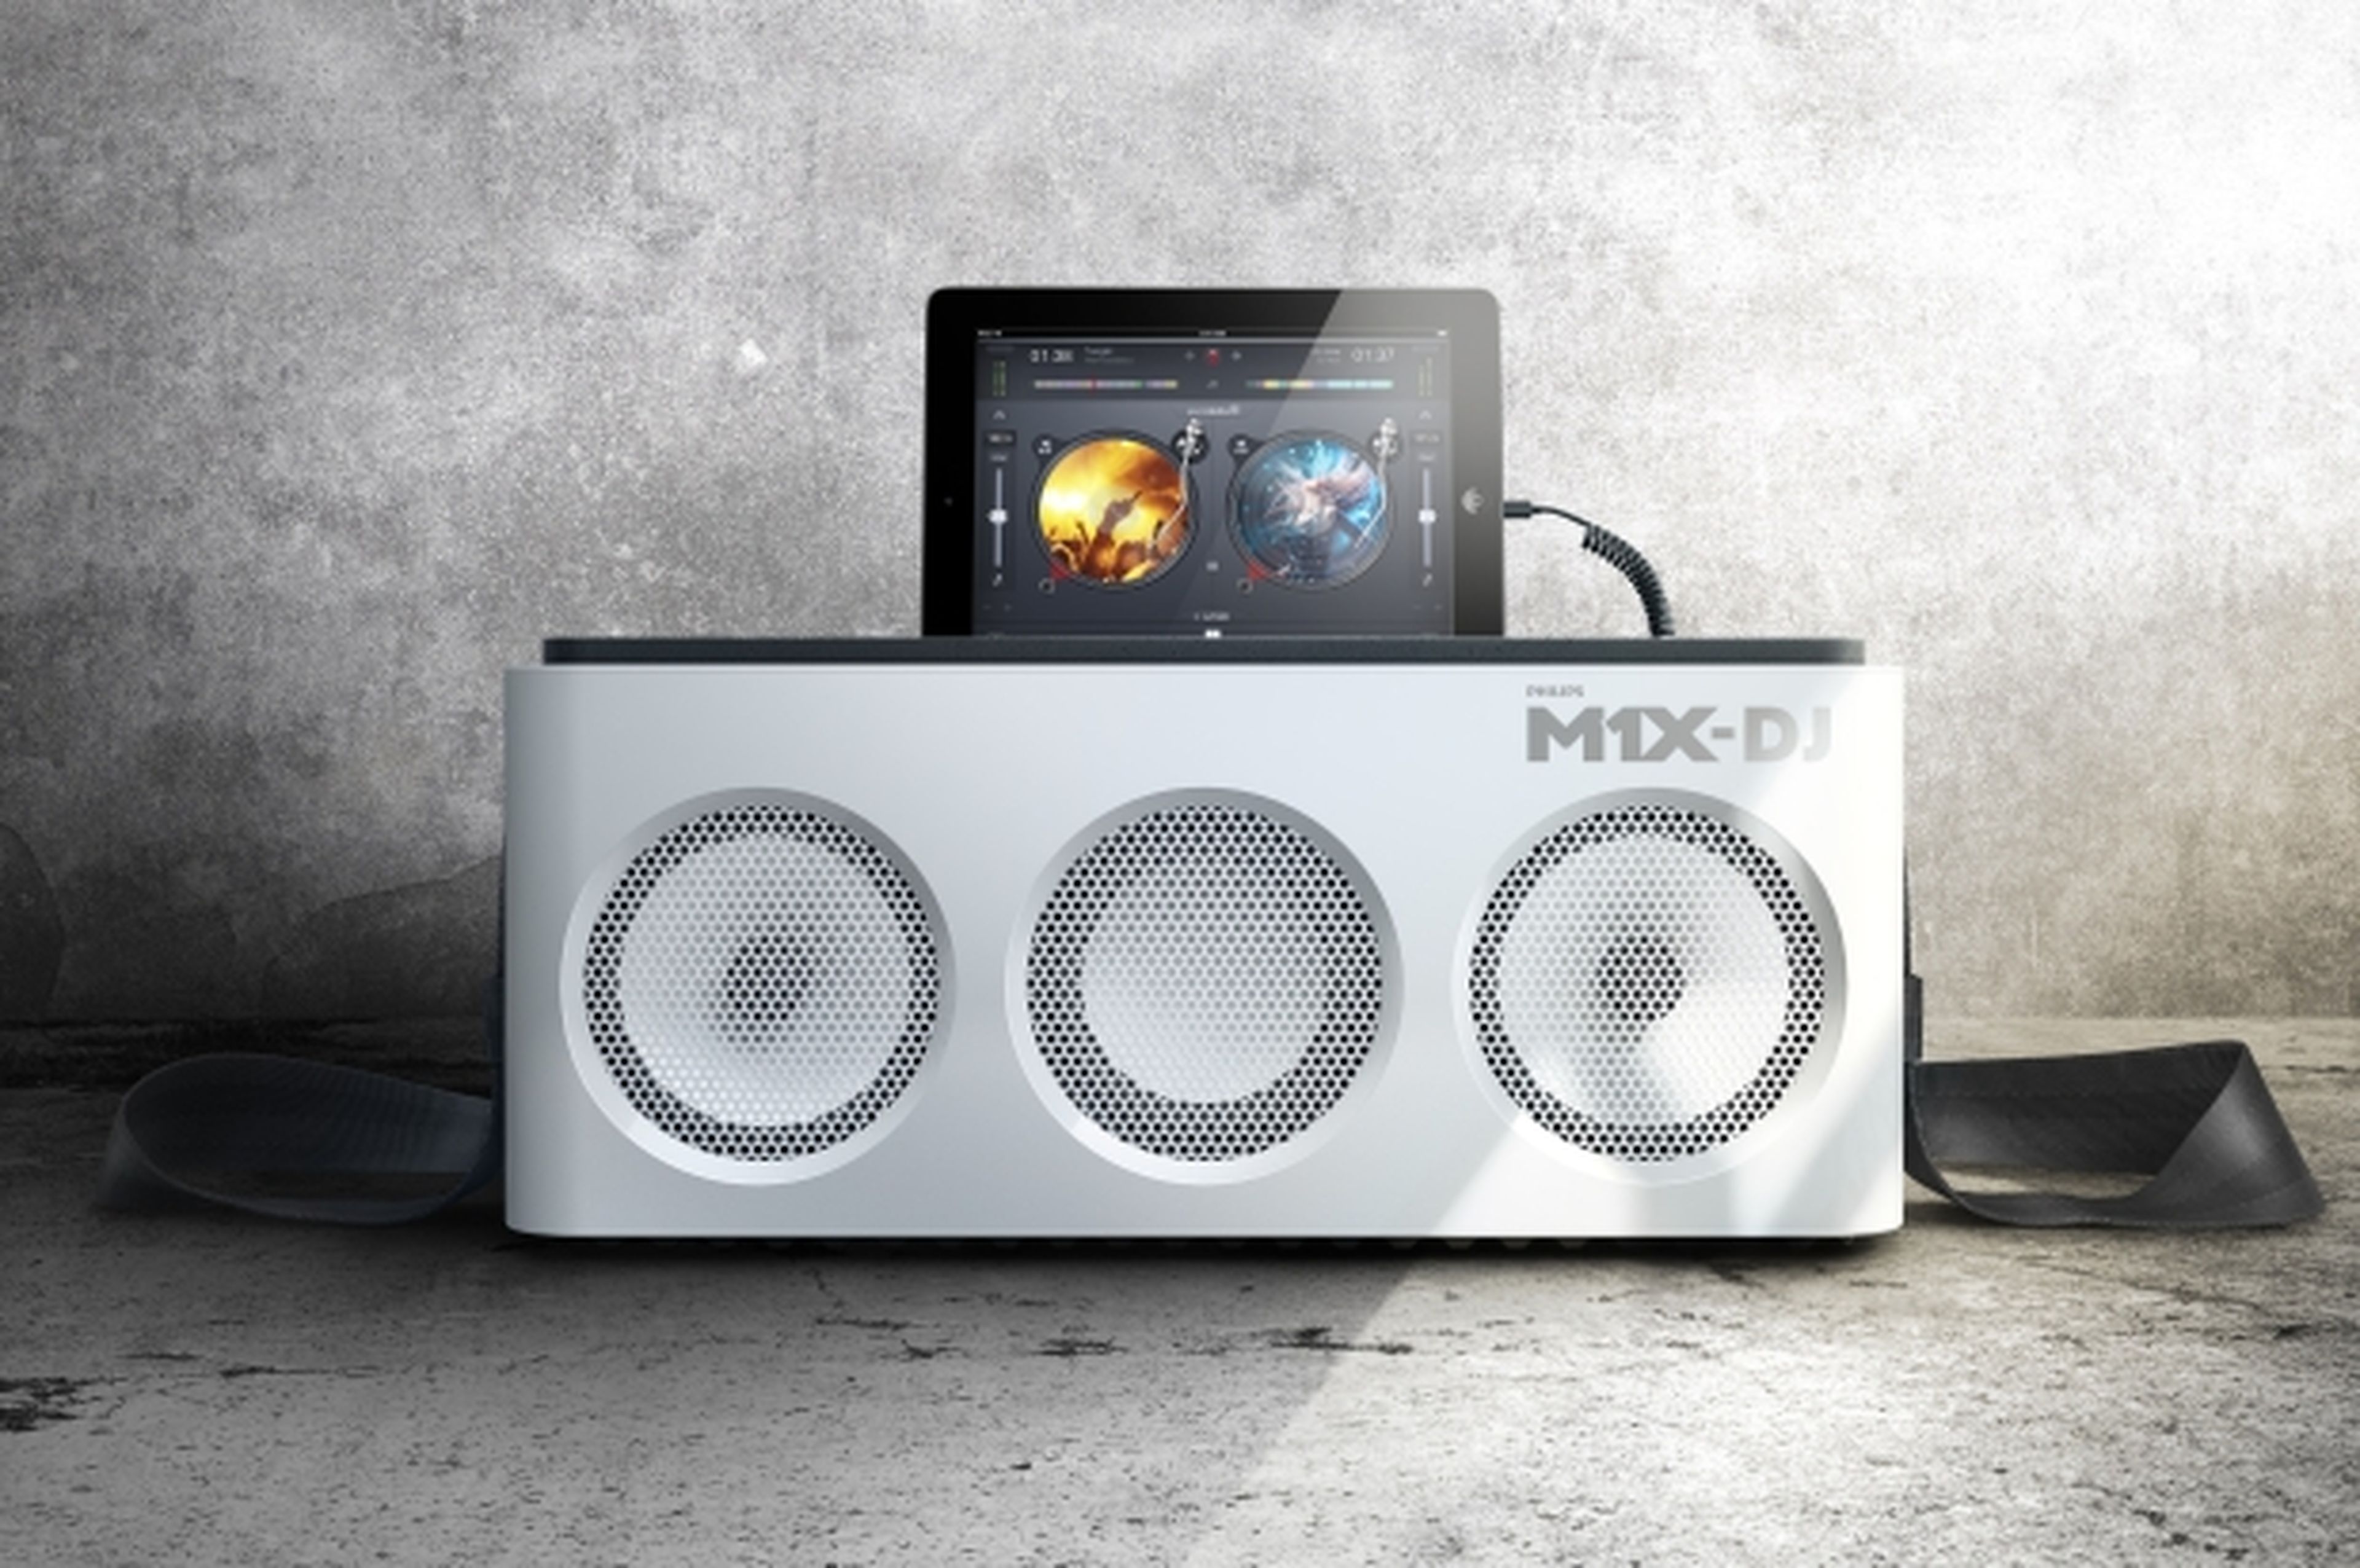 Philips y Armin van Buuren estrenan la mesa de mezclas M1X-DJ